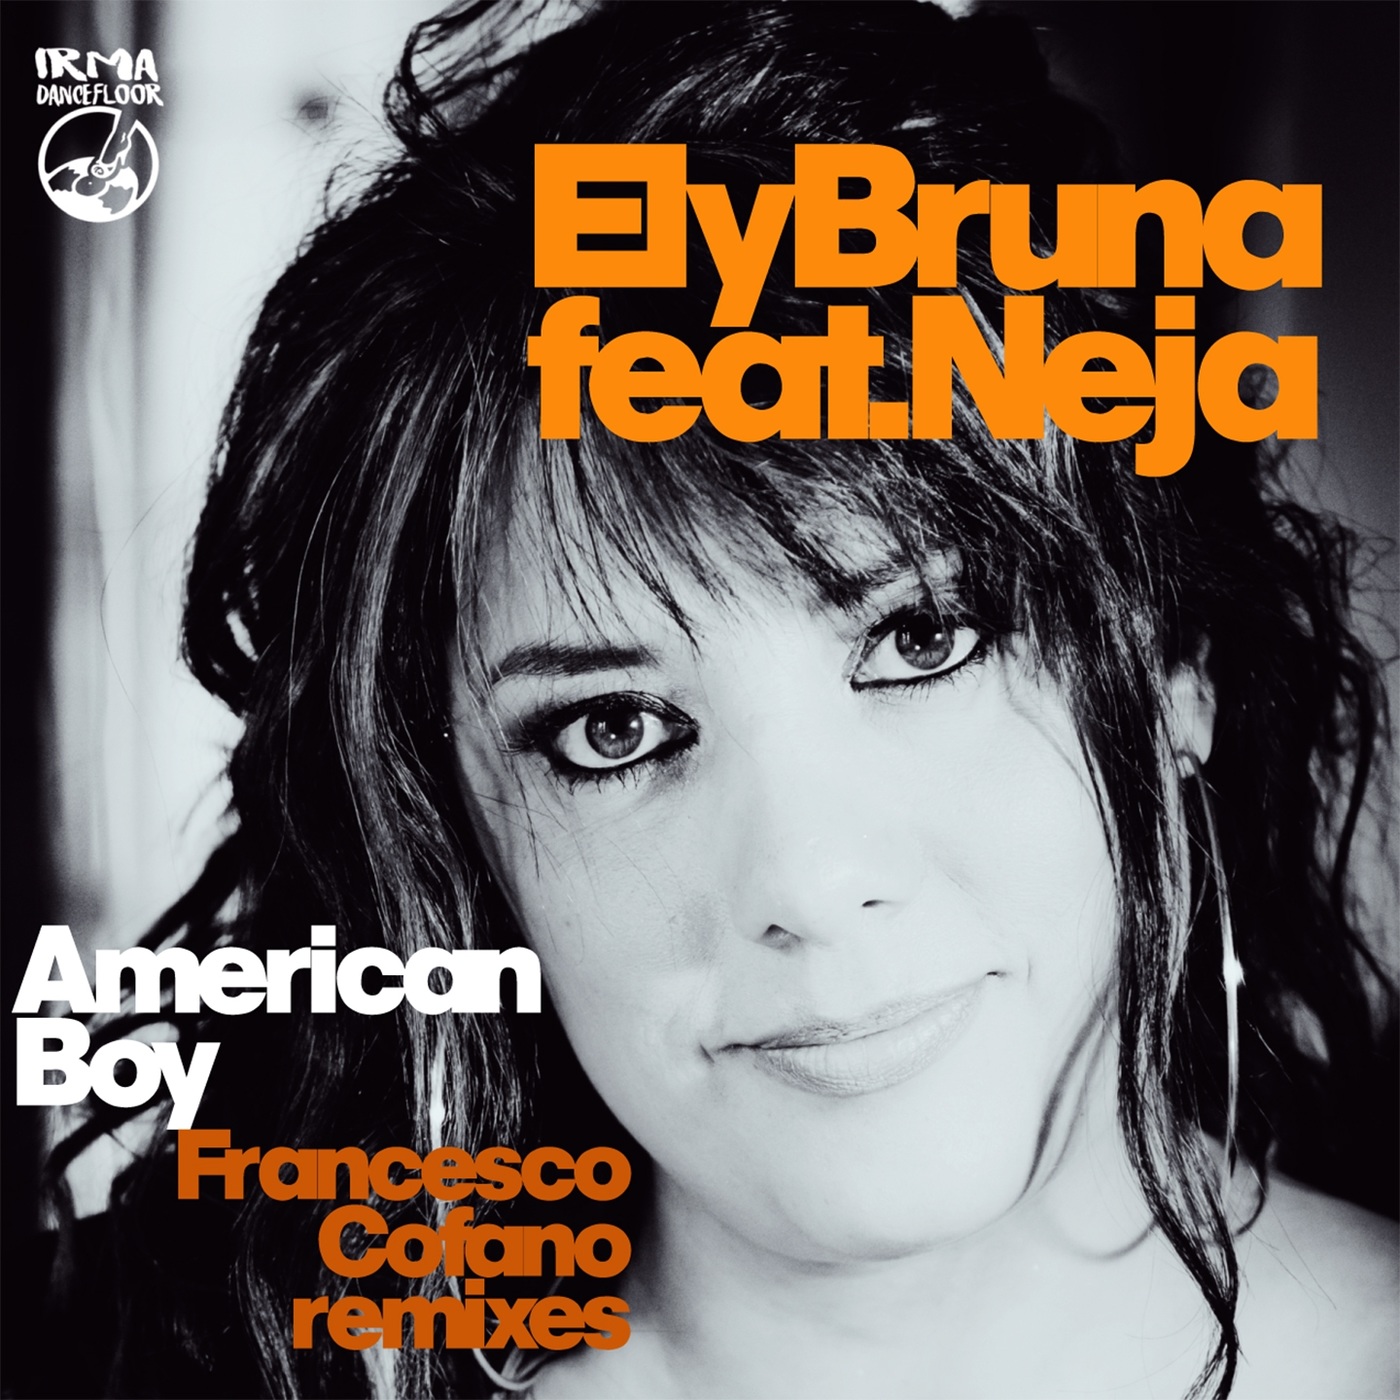 Ely Bruna ft Neja - American Boy (Francesco Cofano Remixes) / Irma Dancefloor